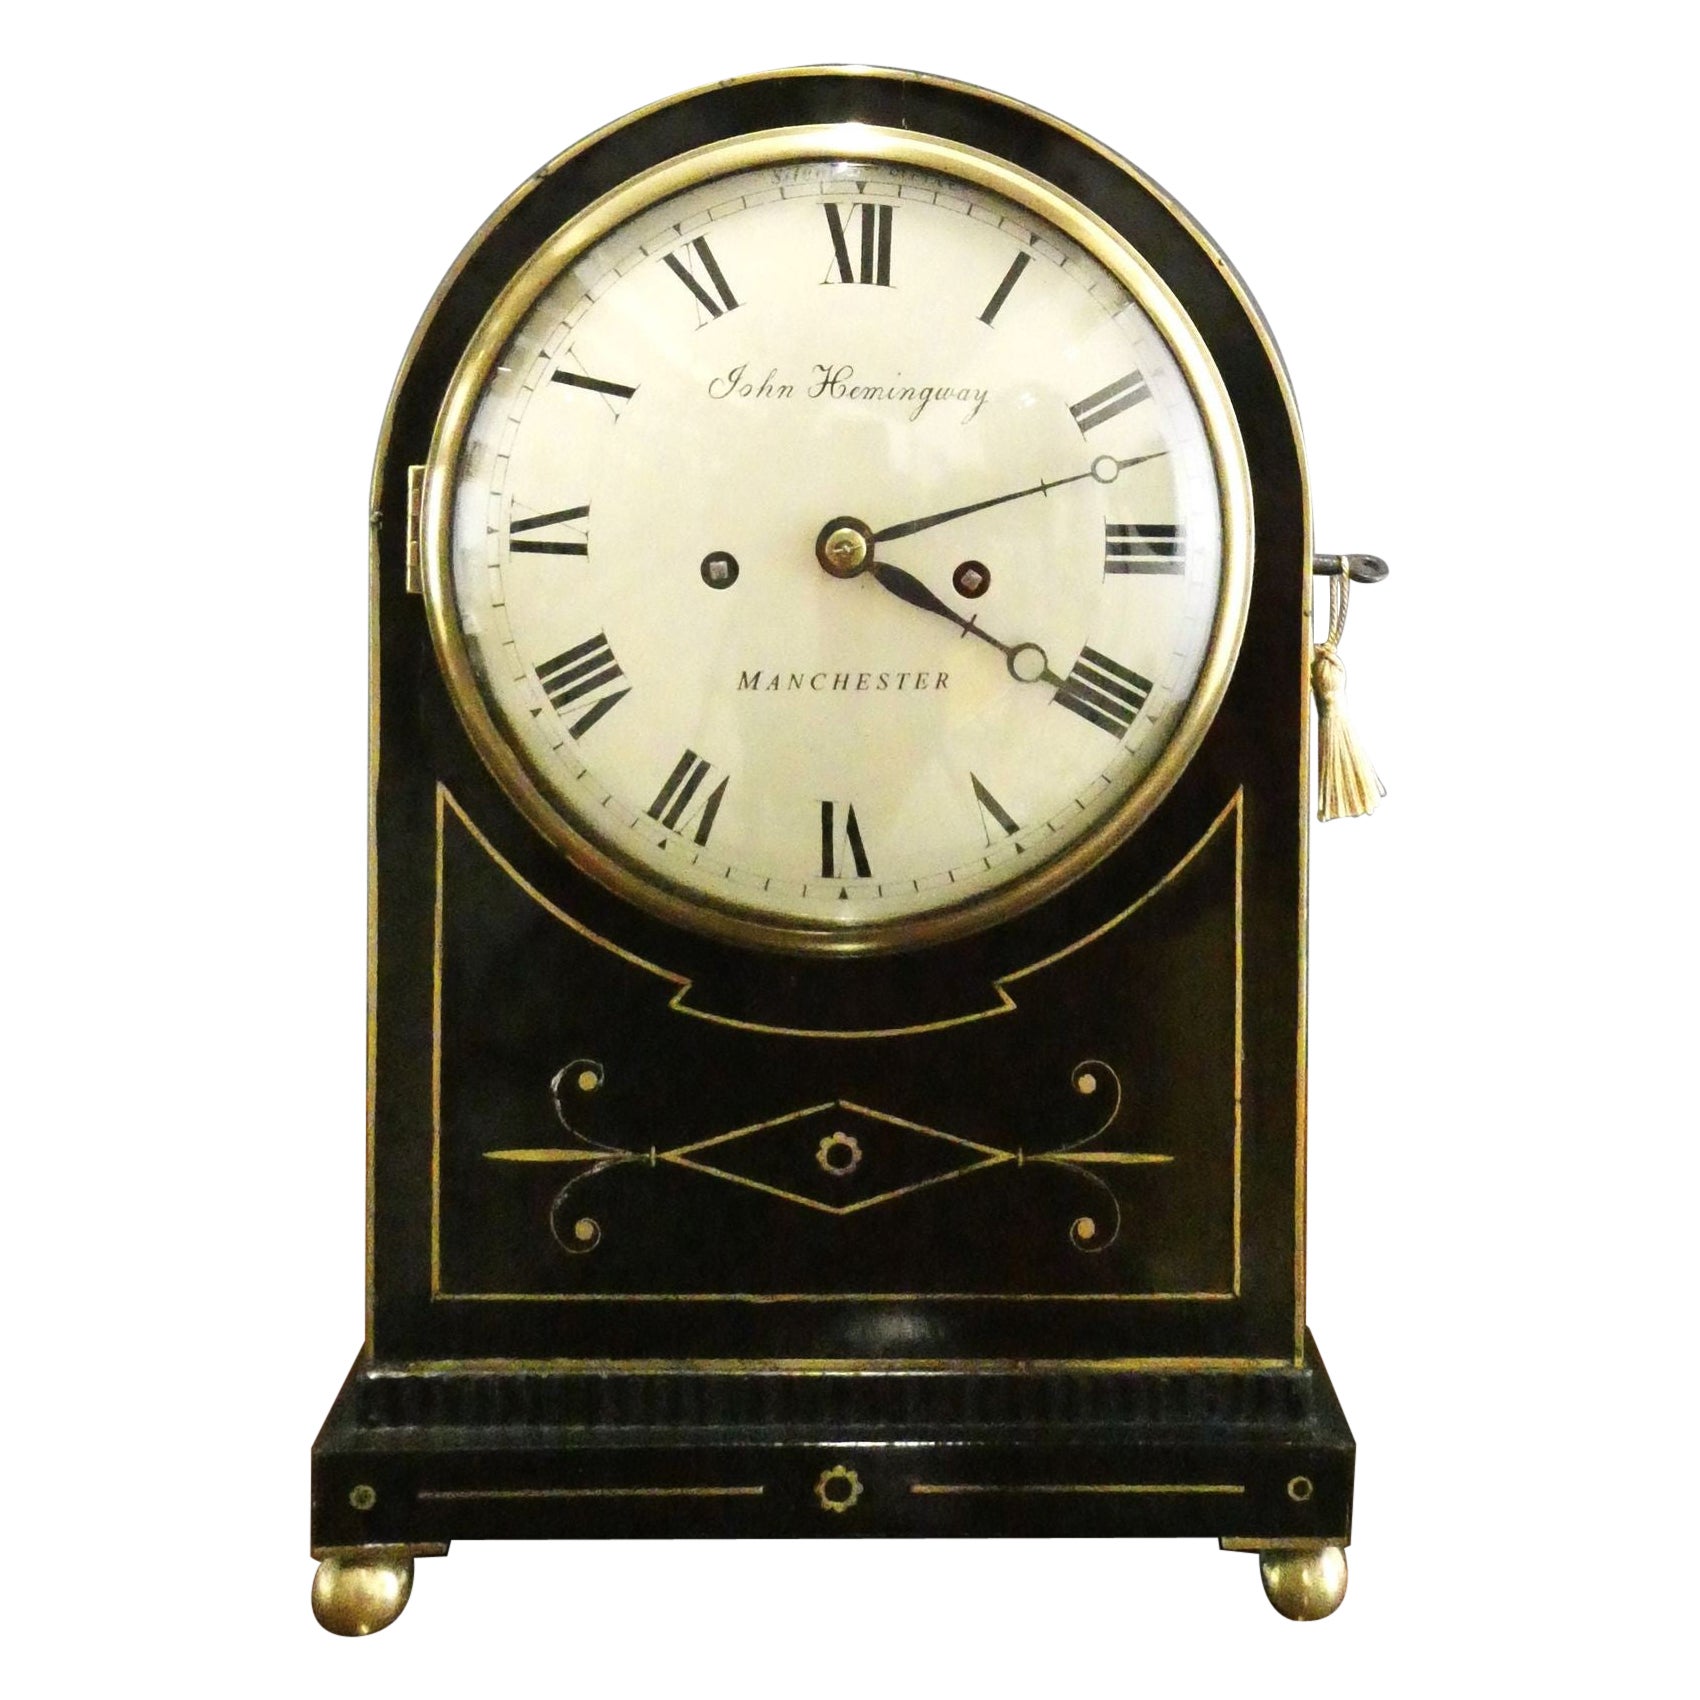 Regency Ebonised Bracket Clock by John Hemingway, Manchester